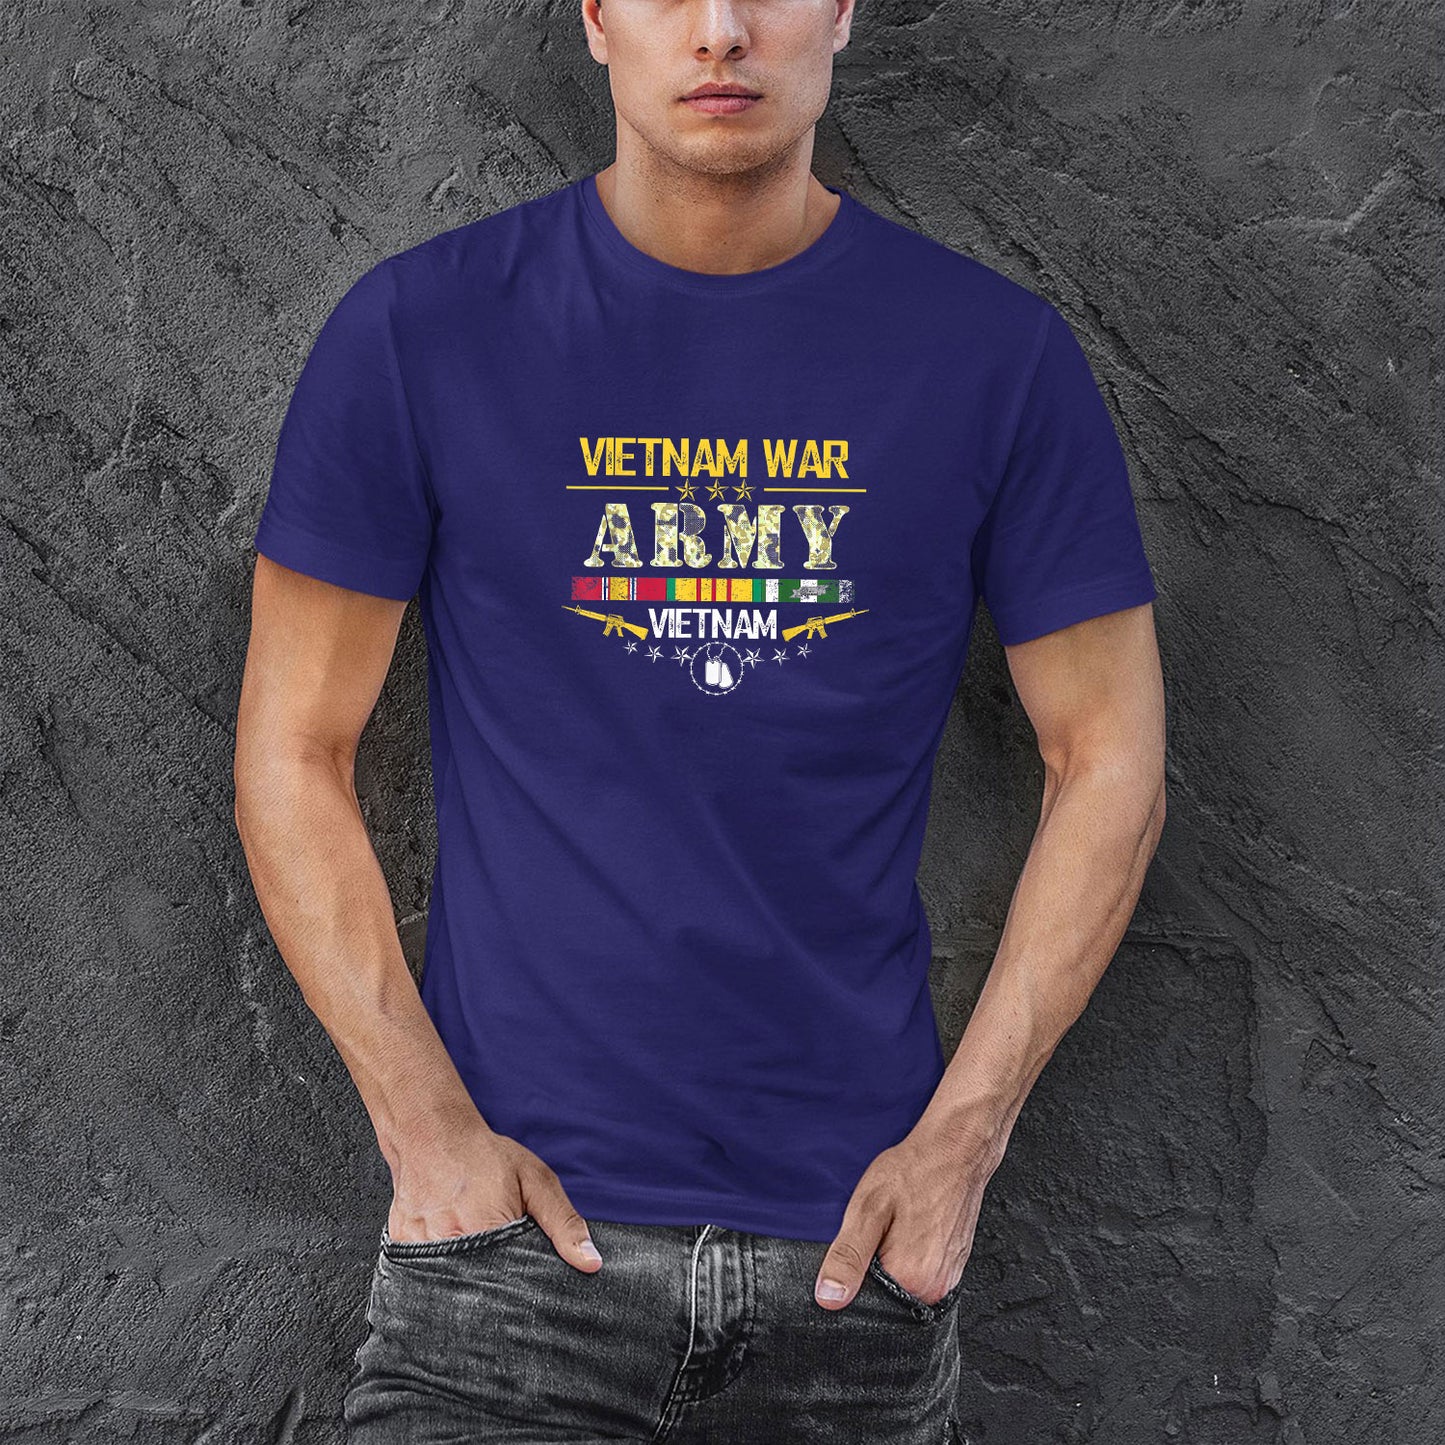 Memorial Day 2021 Vietnam Veteran T Shirts, Vietnam Veteran War Army T Shirt For Those Who Served T shirt For Men, Cotton Shirt, Air Force Memorial Shirt, Usaf T Shirt